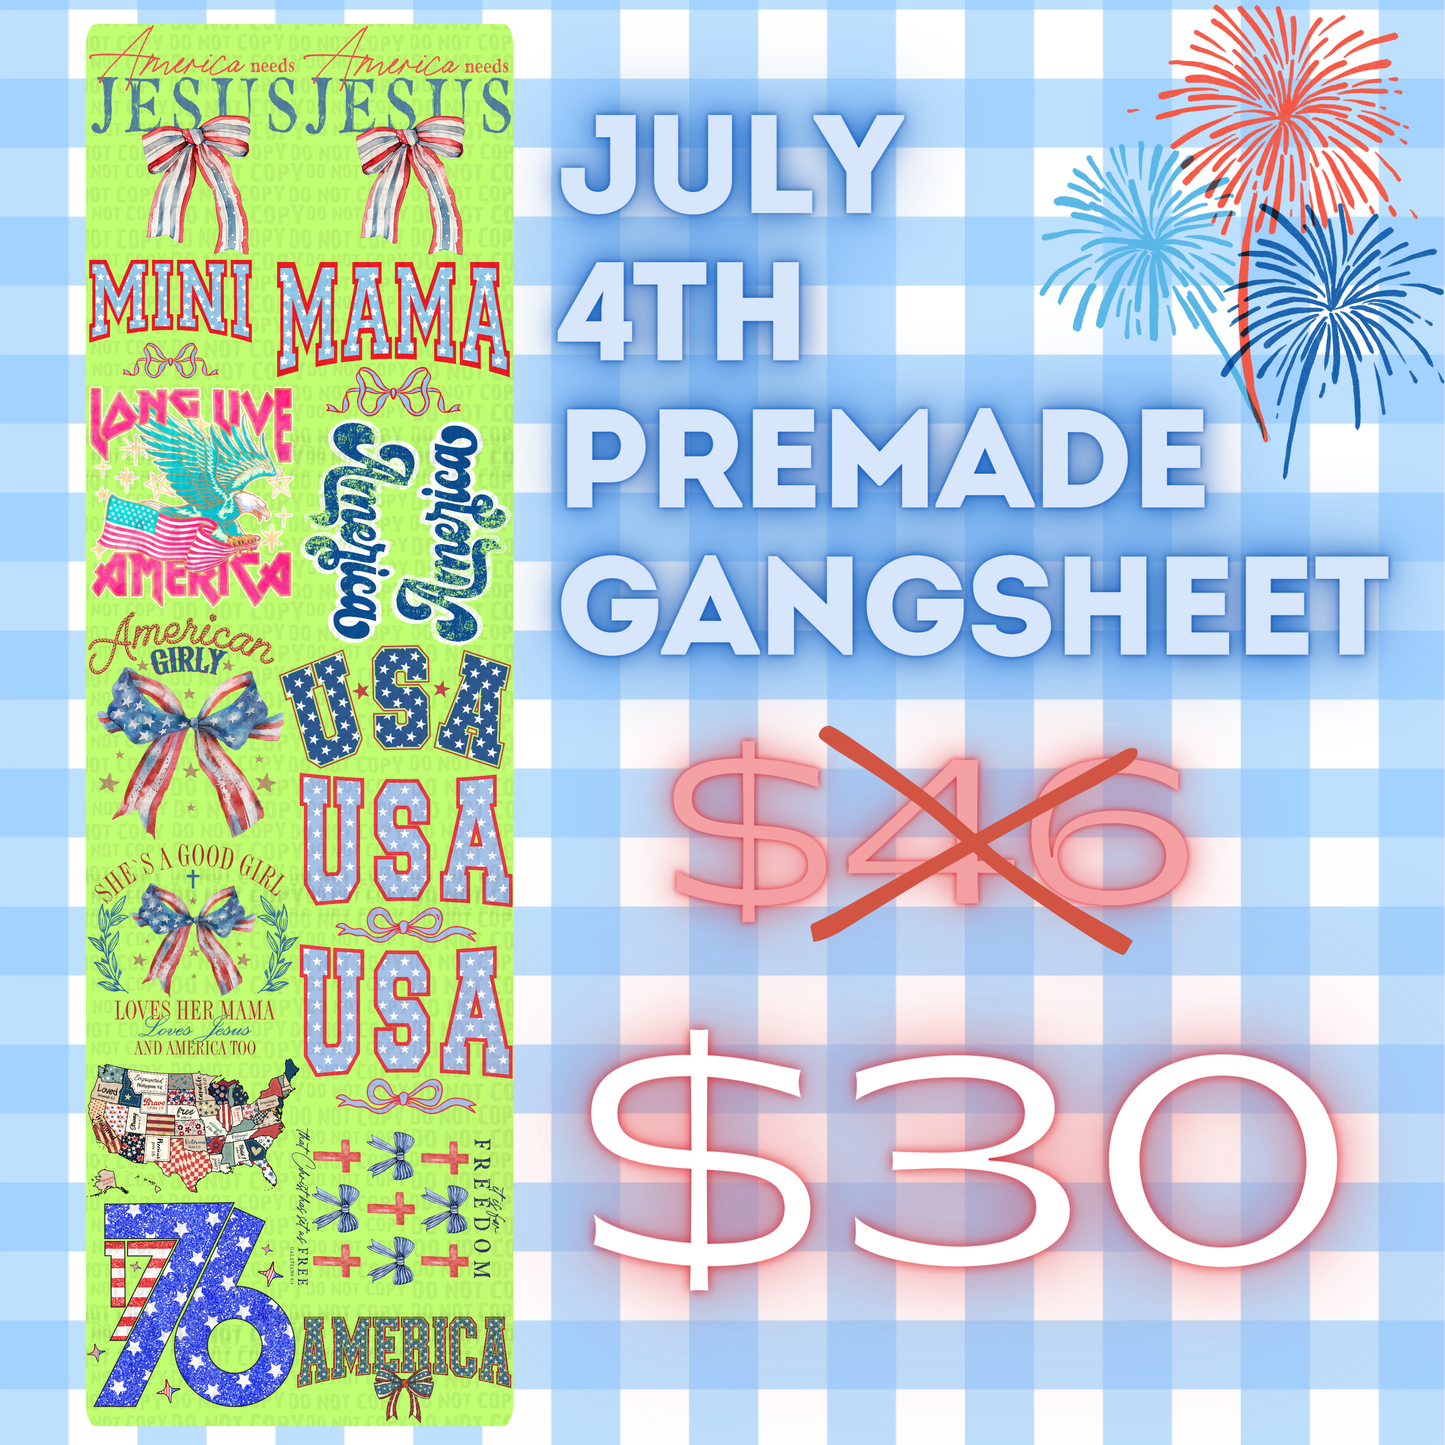 July 4th Premade Gangsheet